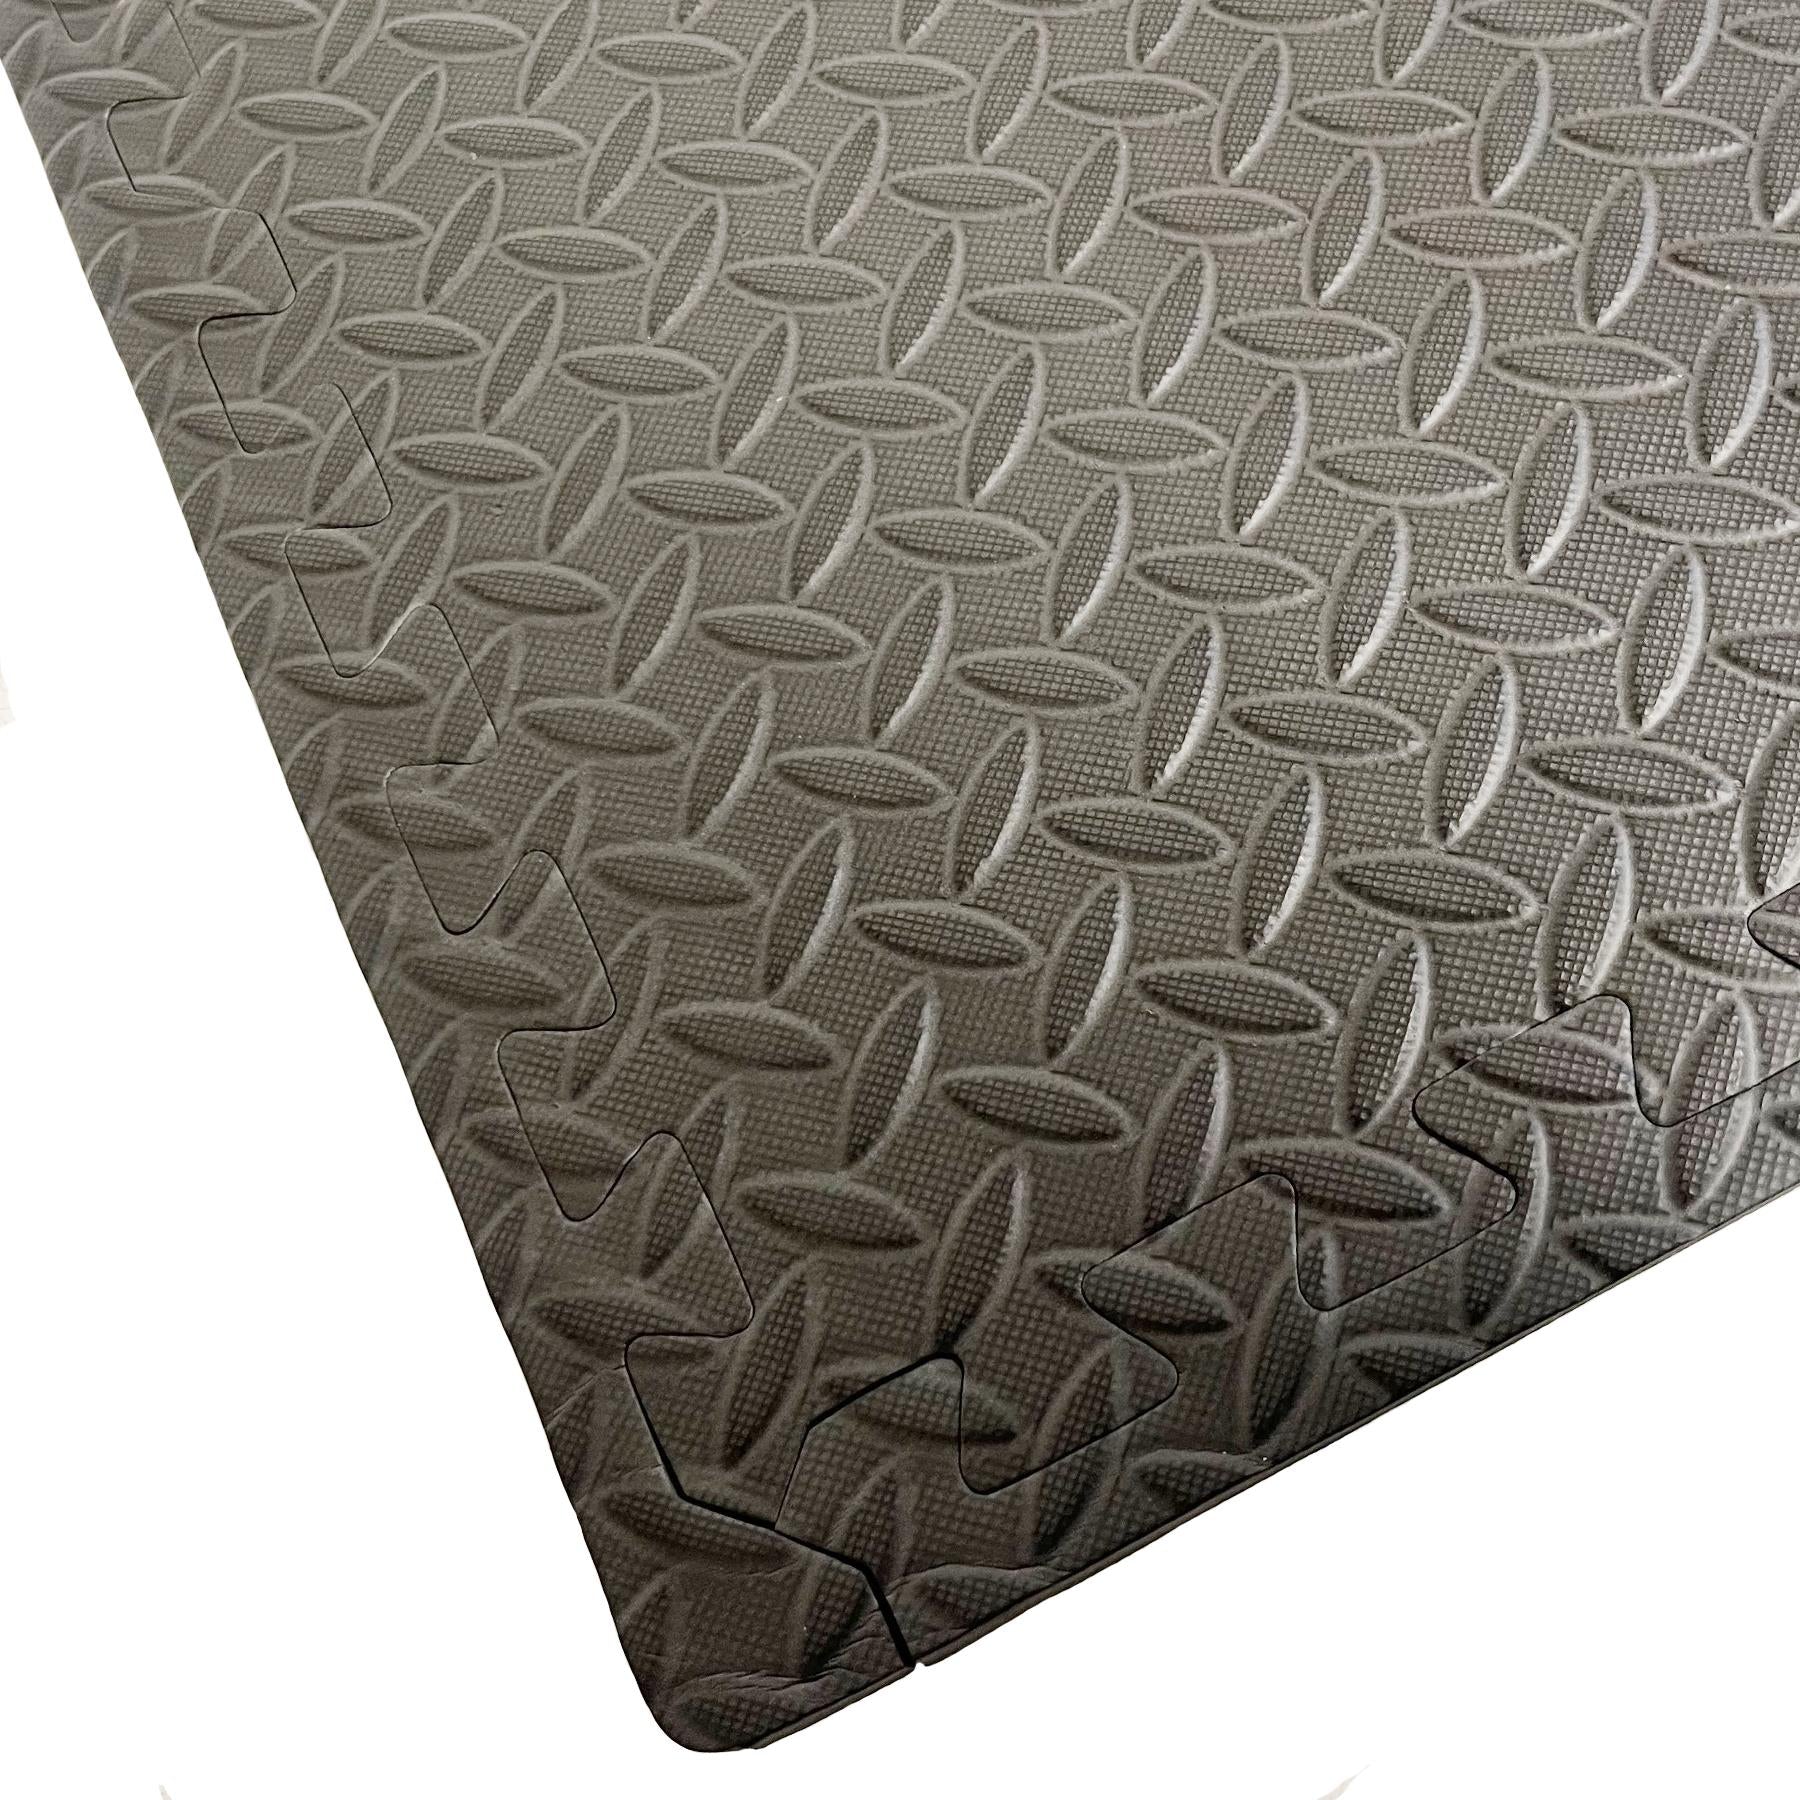 EVA Interlocking Floor Mat Flooring Soft Water Resistant 60 x 60cm Each Tile